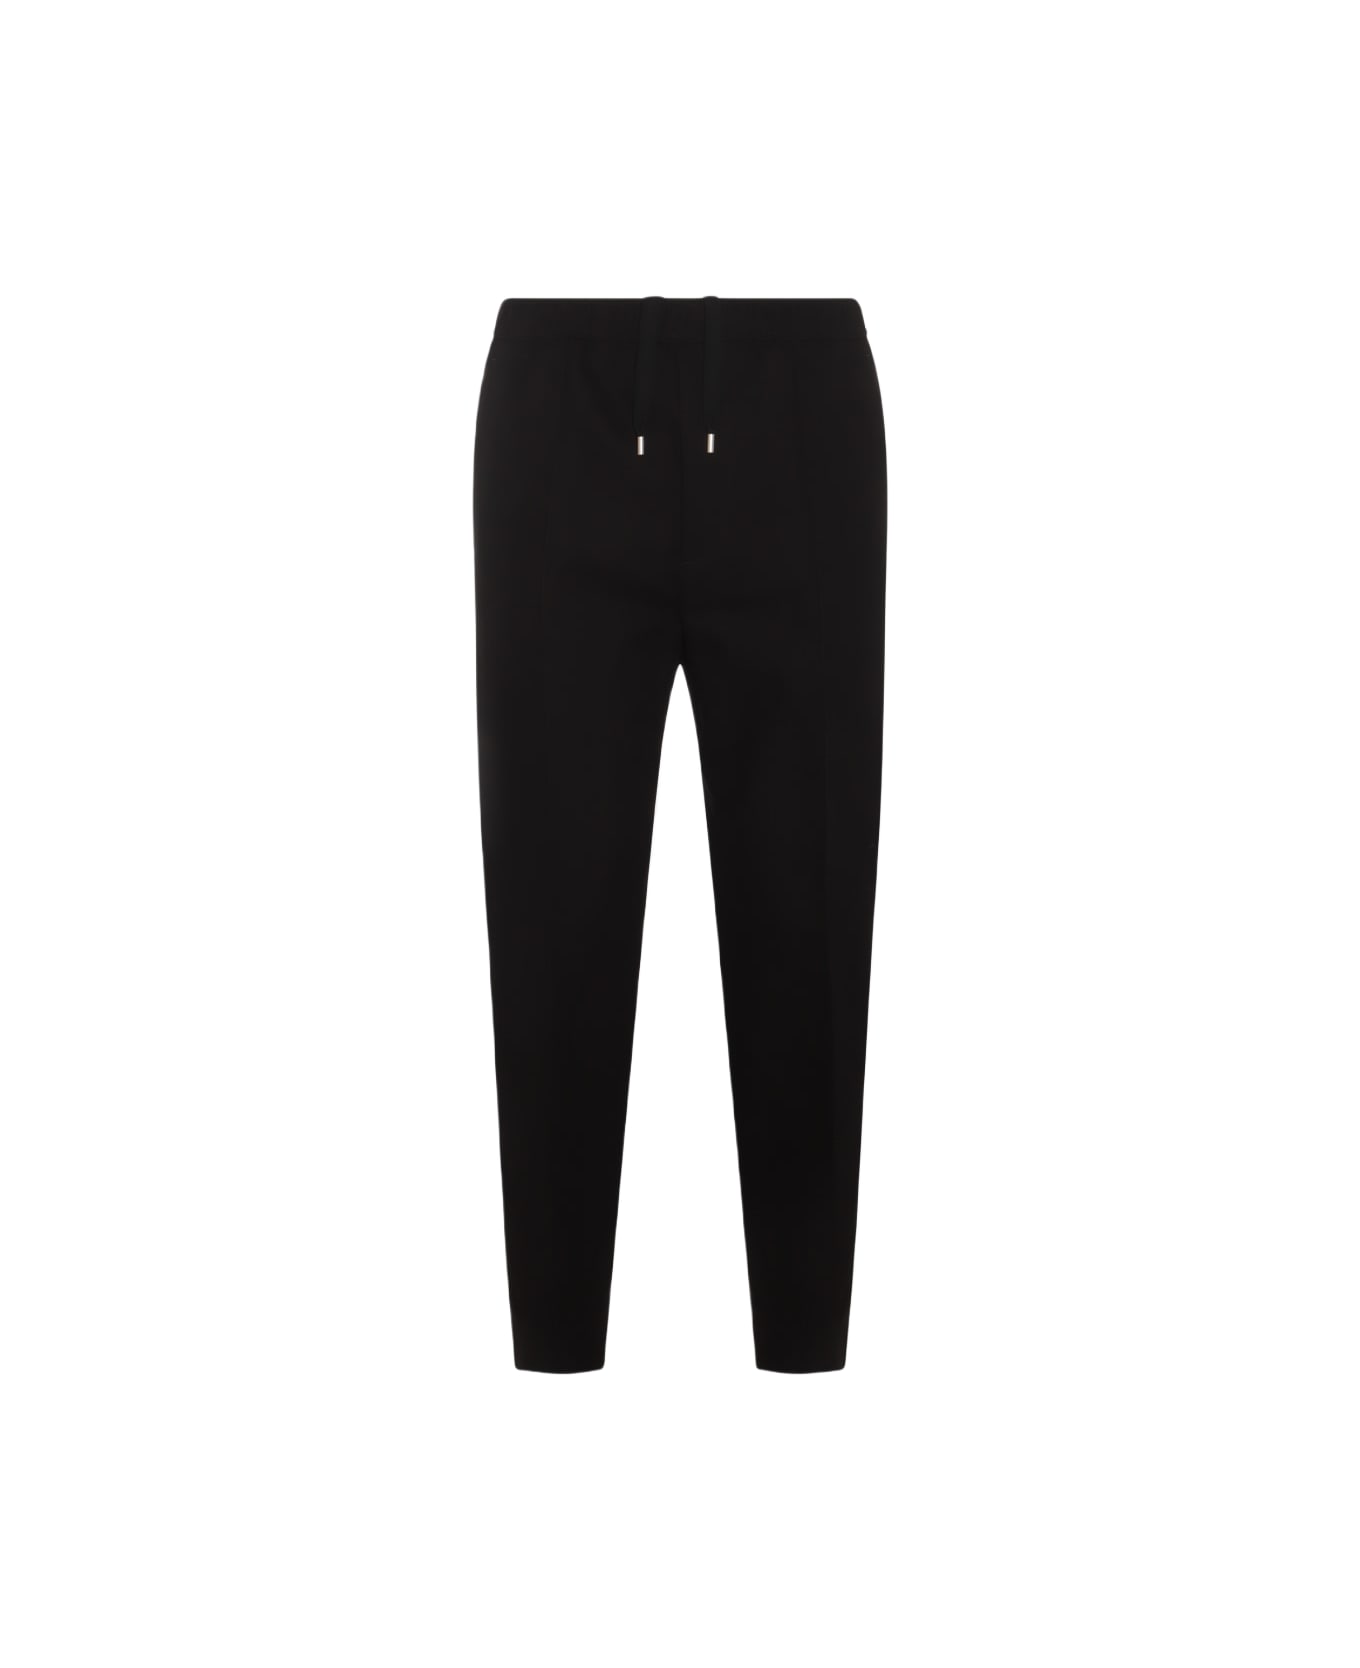 Lanvin Black Cotton Pants - Black